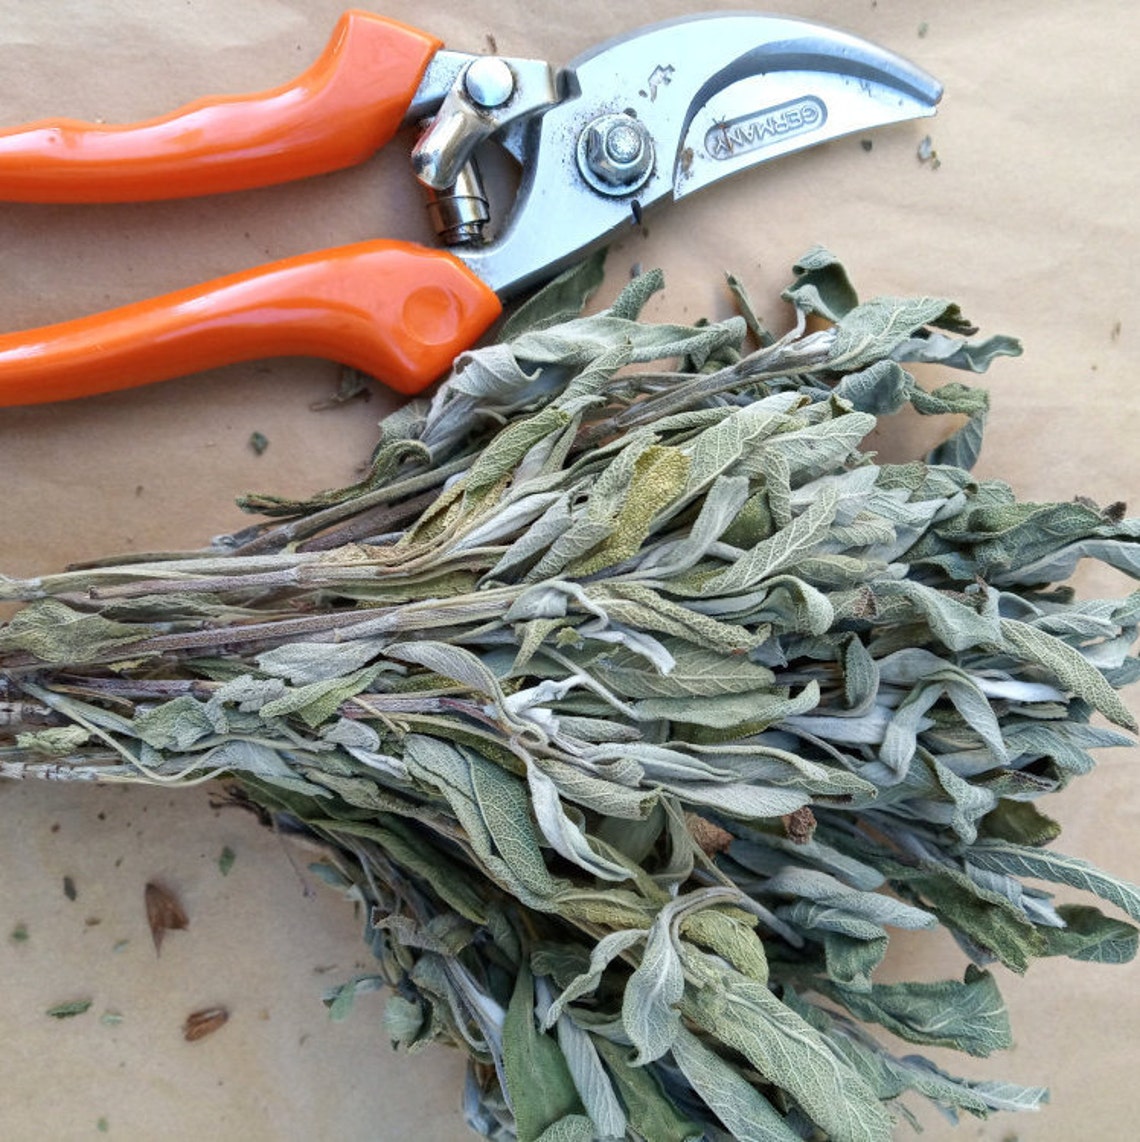 Dried Sage Loose Leaves Herbal Tea | Salvia Triloba